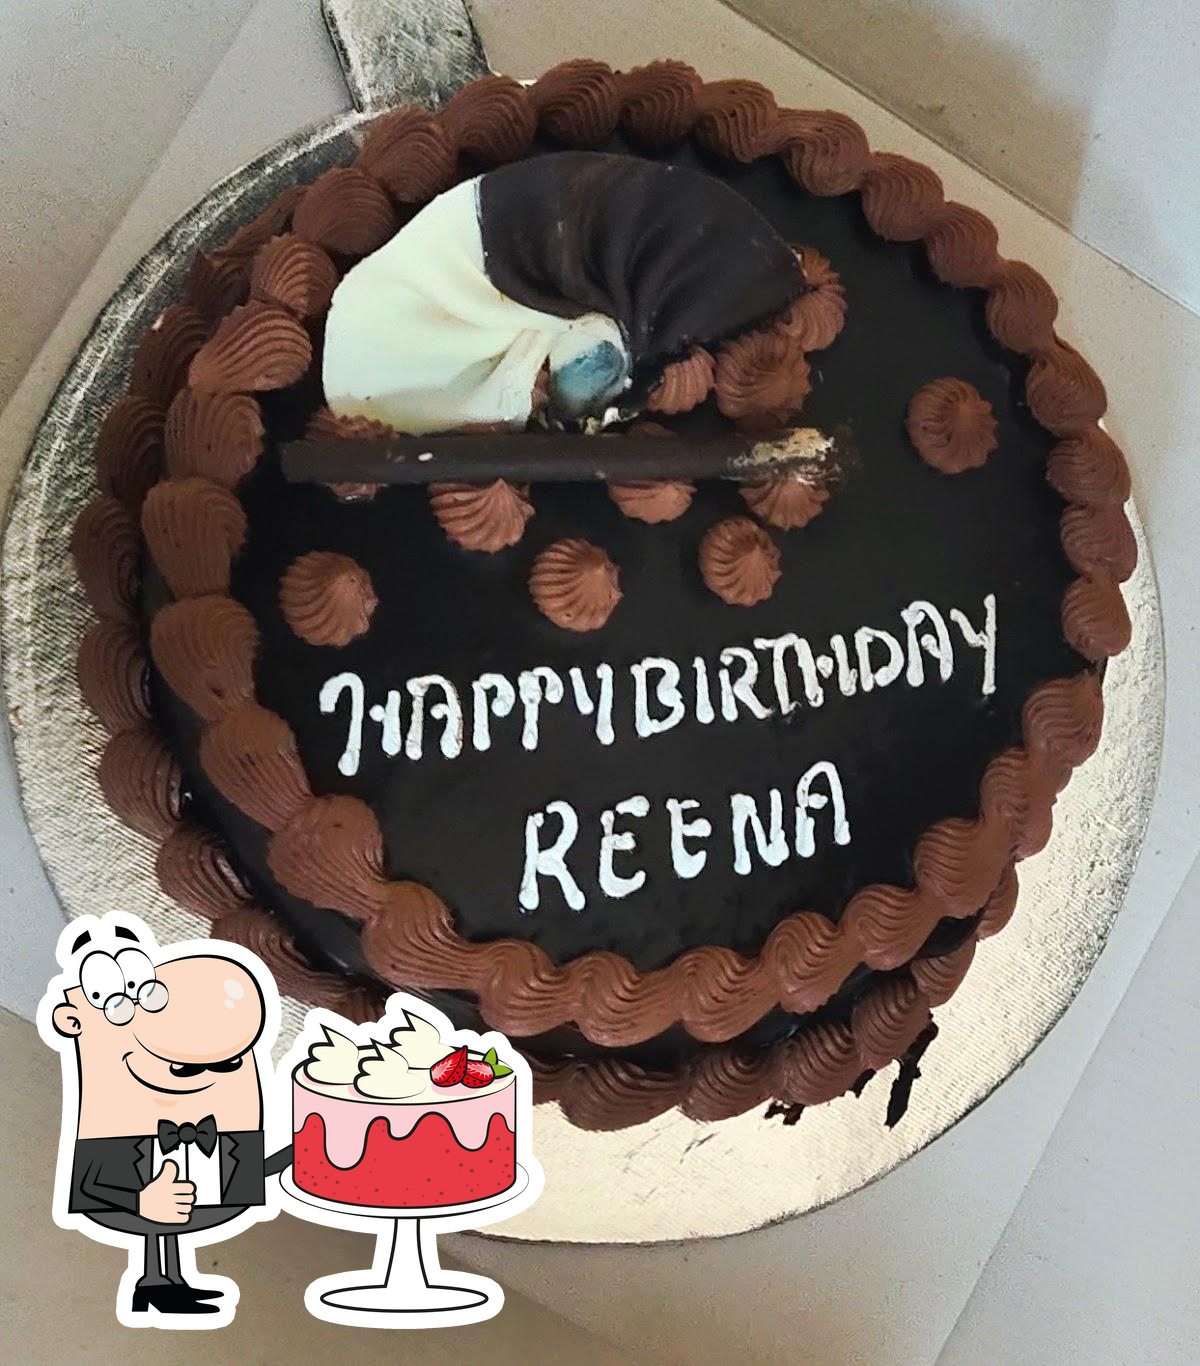 Reena Happy Birthday Cakes Pics Gallery